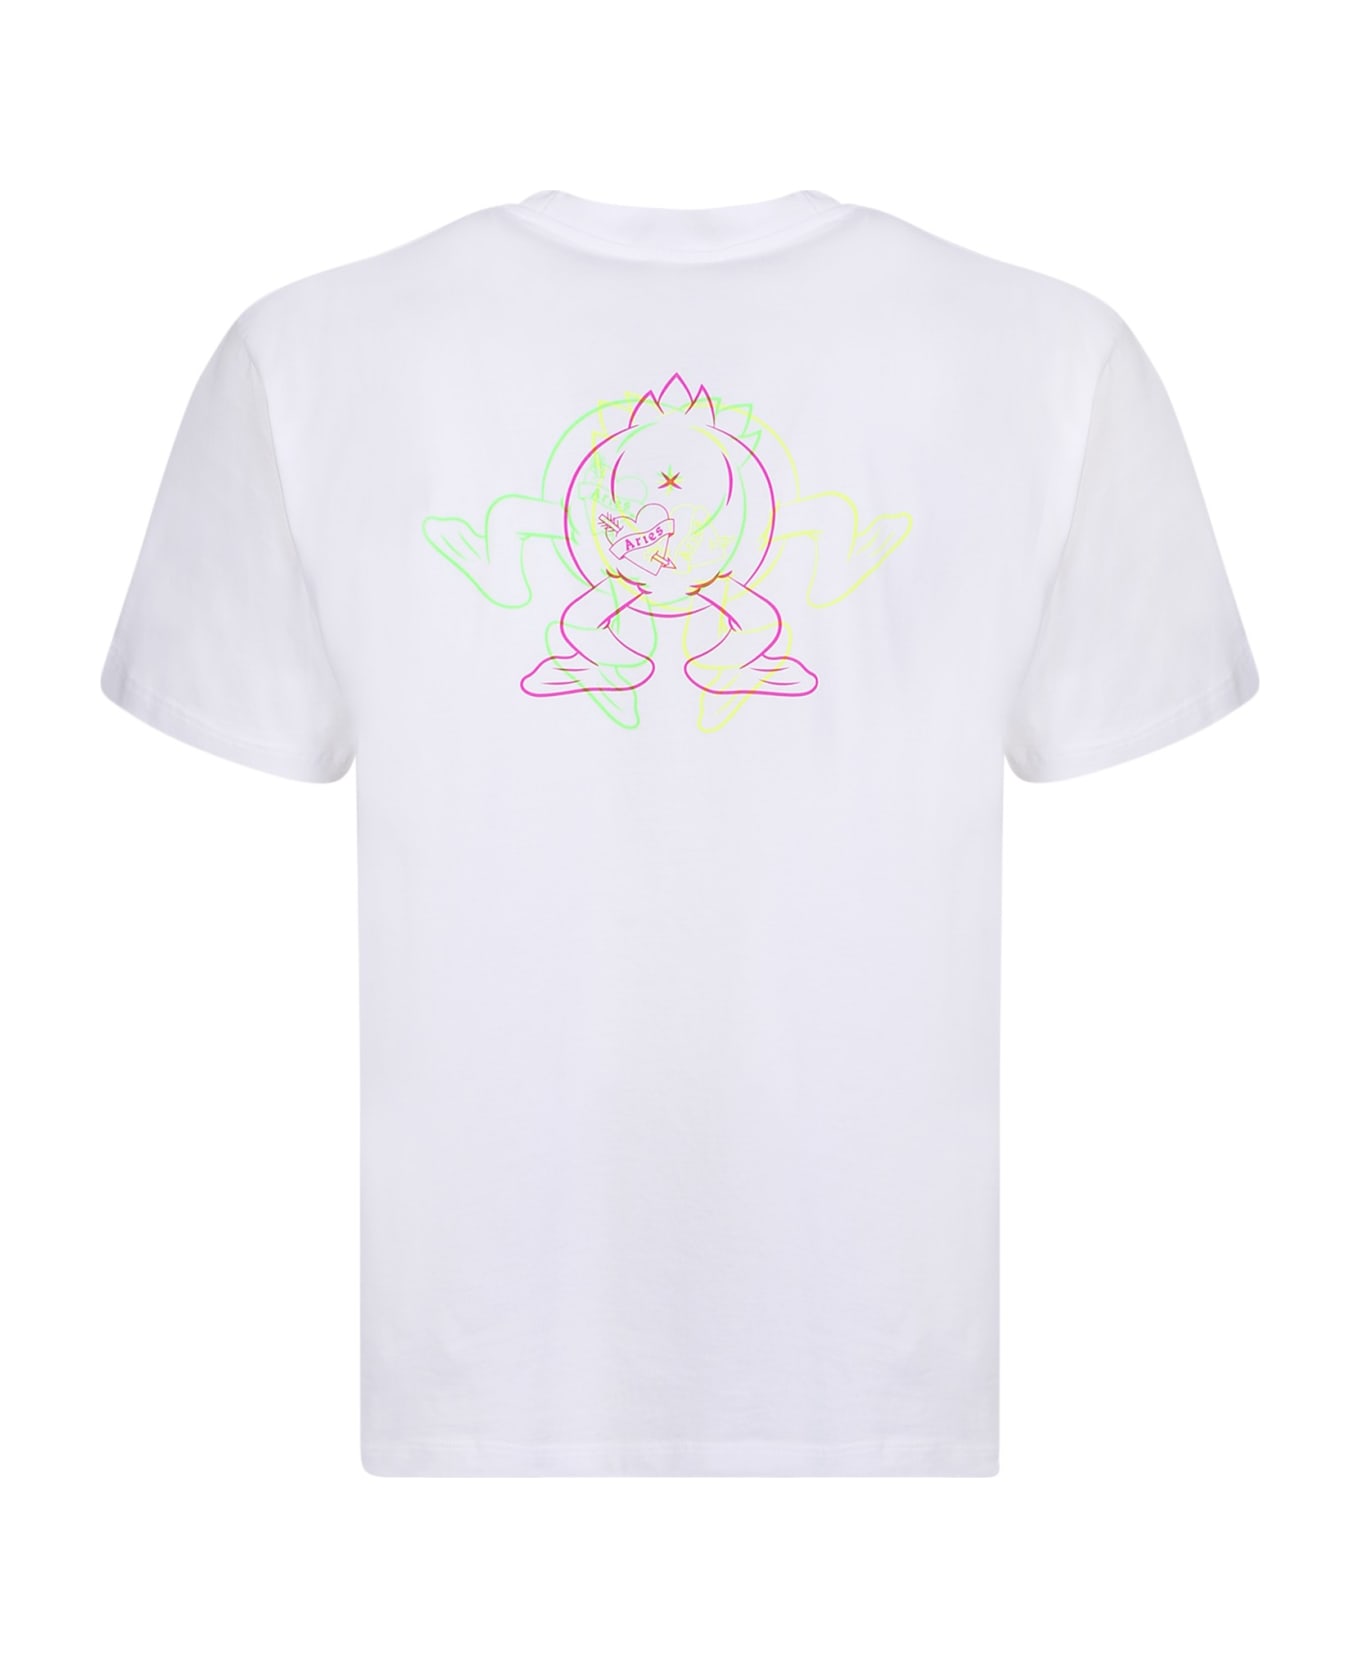 Aries Trippy Duck T-shirt - White